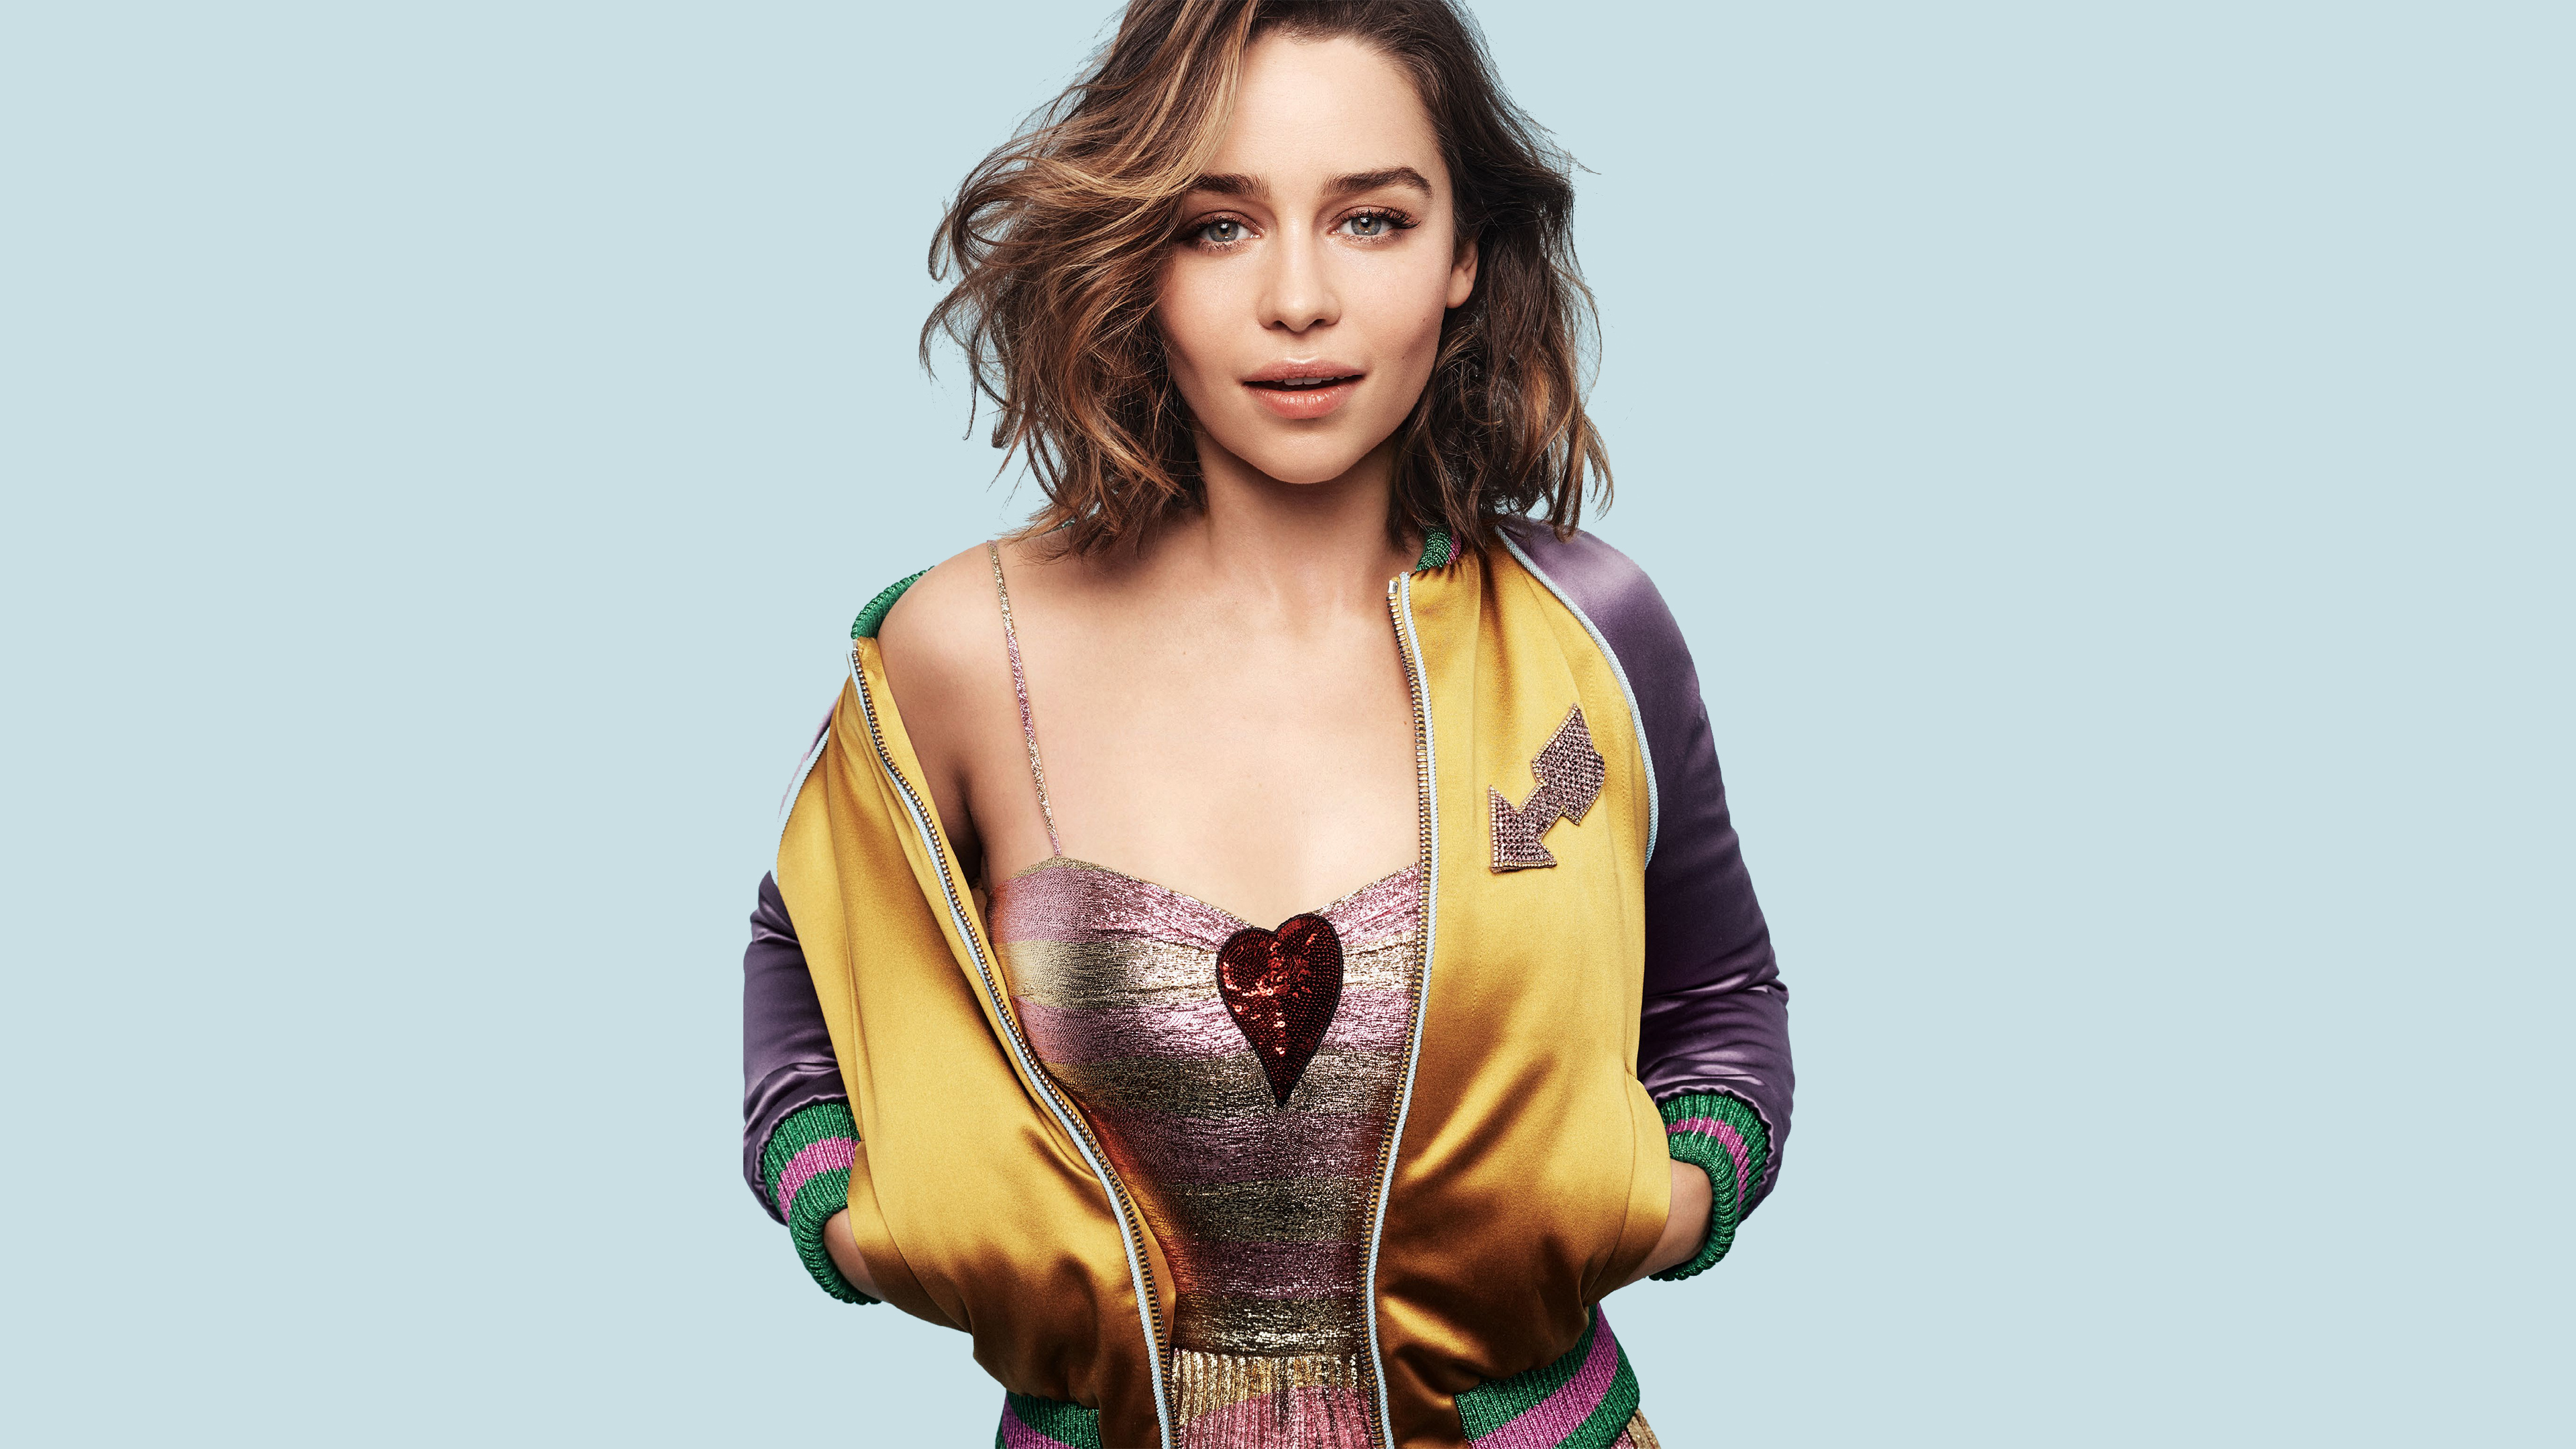 Emilia Clarke Celebrity Actress 4K Wallpaper 6326